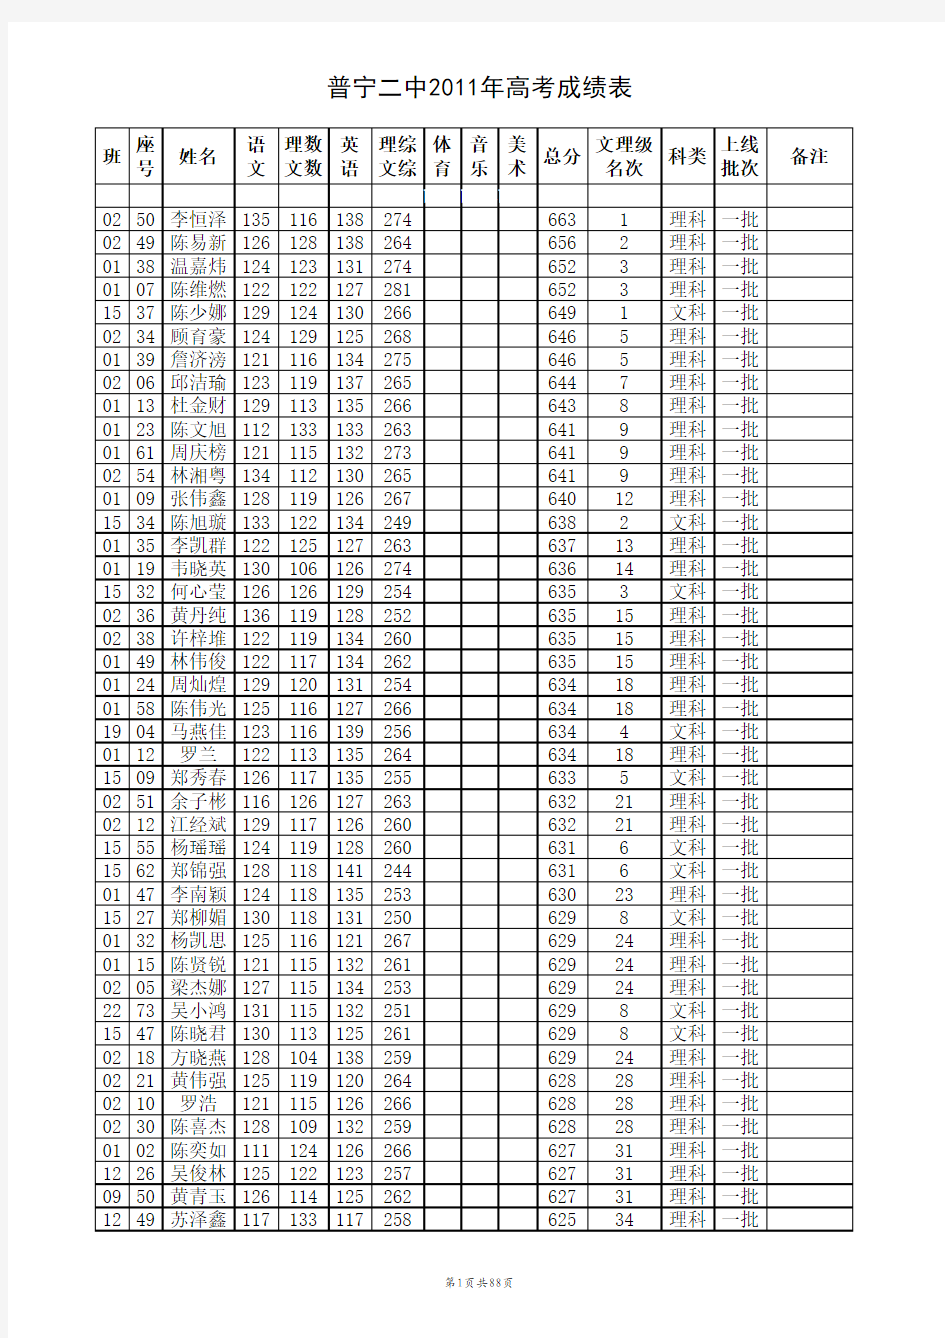 11gkf(普宁二中2011年高考成绩表).xls~RF2a3b37